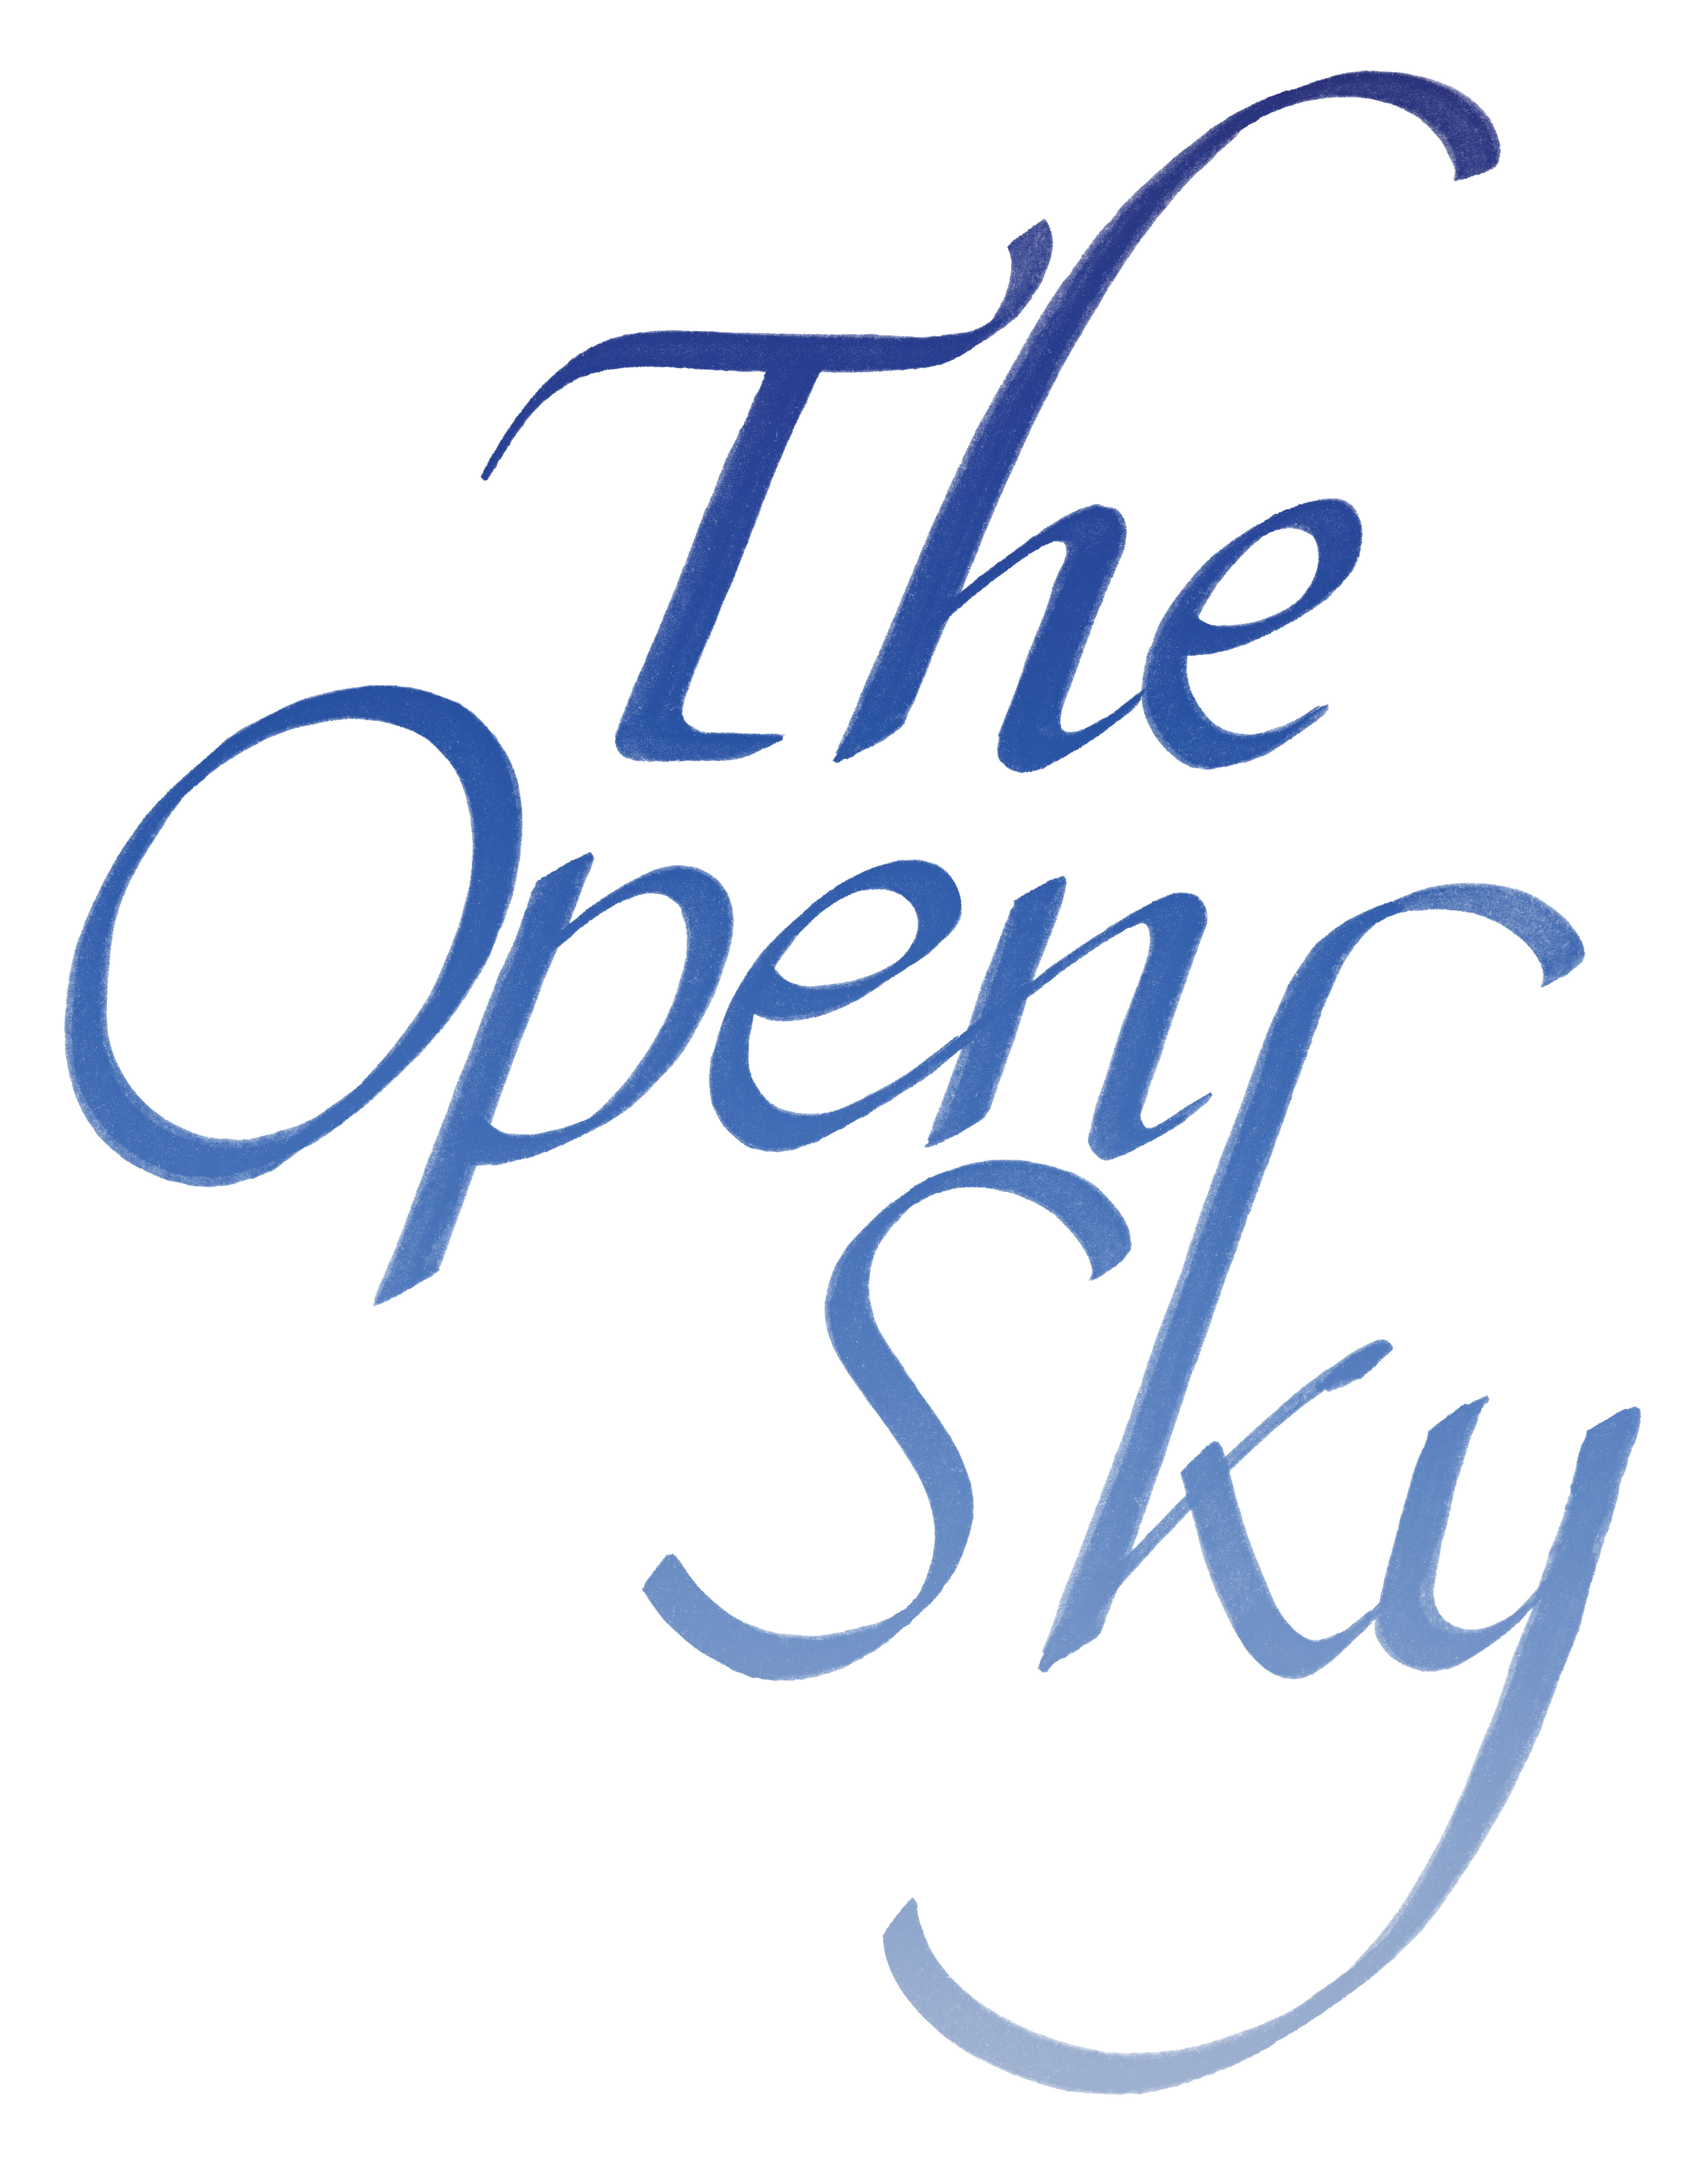 Image: David Andrews (Rory Pilgrim – The Open Sky 1)